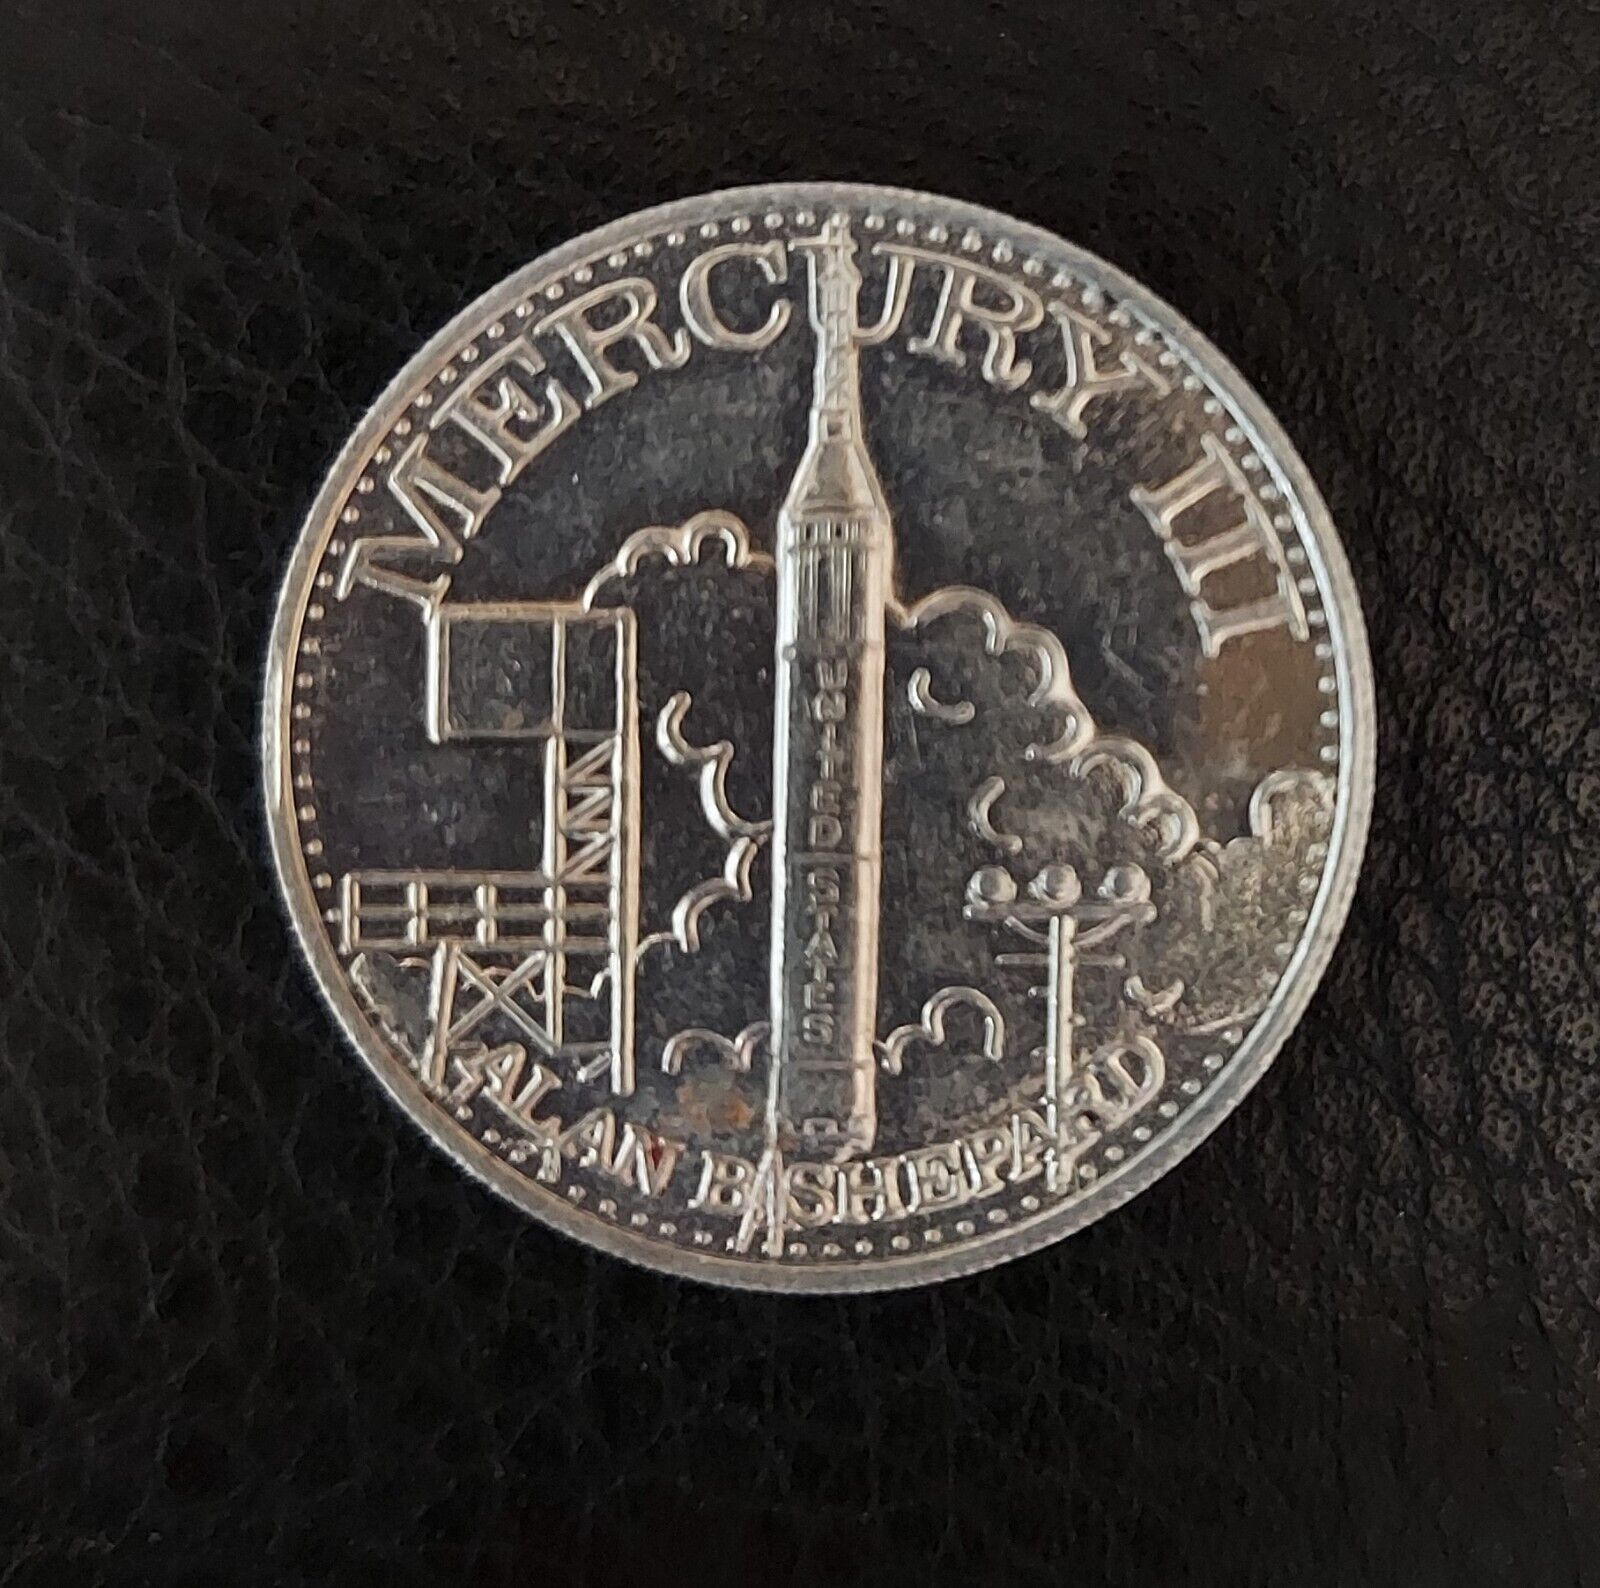 MERCURY III Mission NASA Vintage Space Program Medallion Medal Challenge Coin